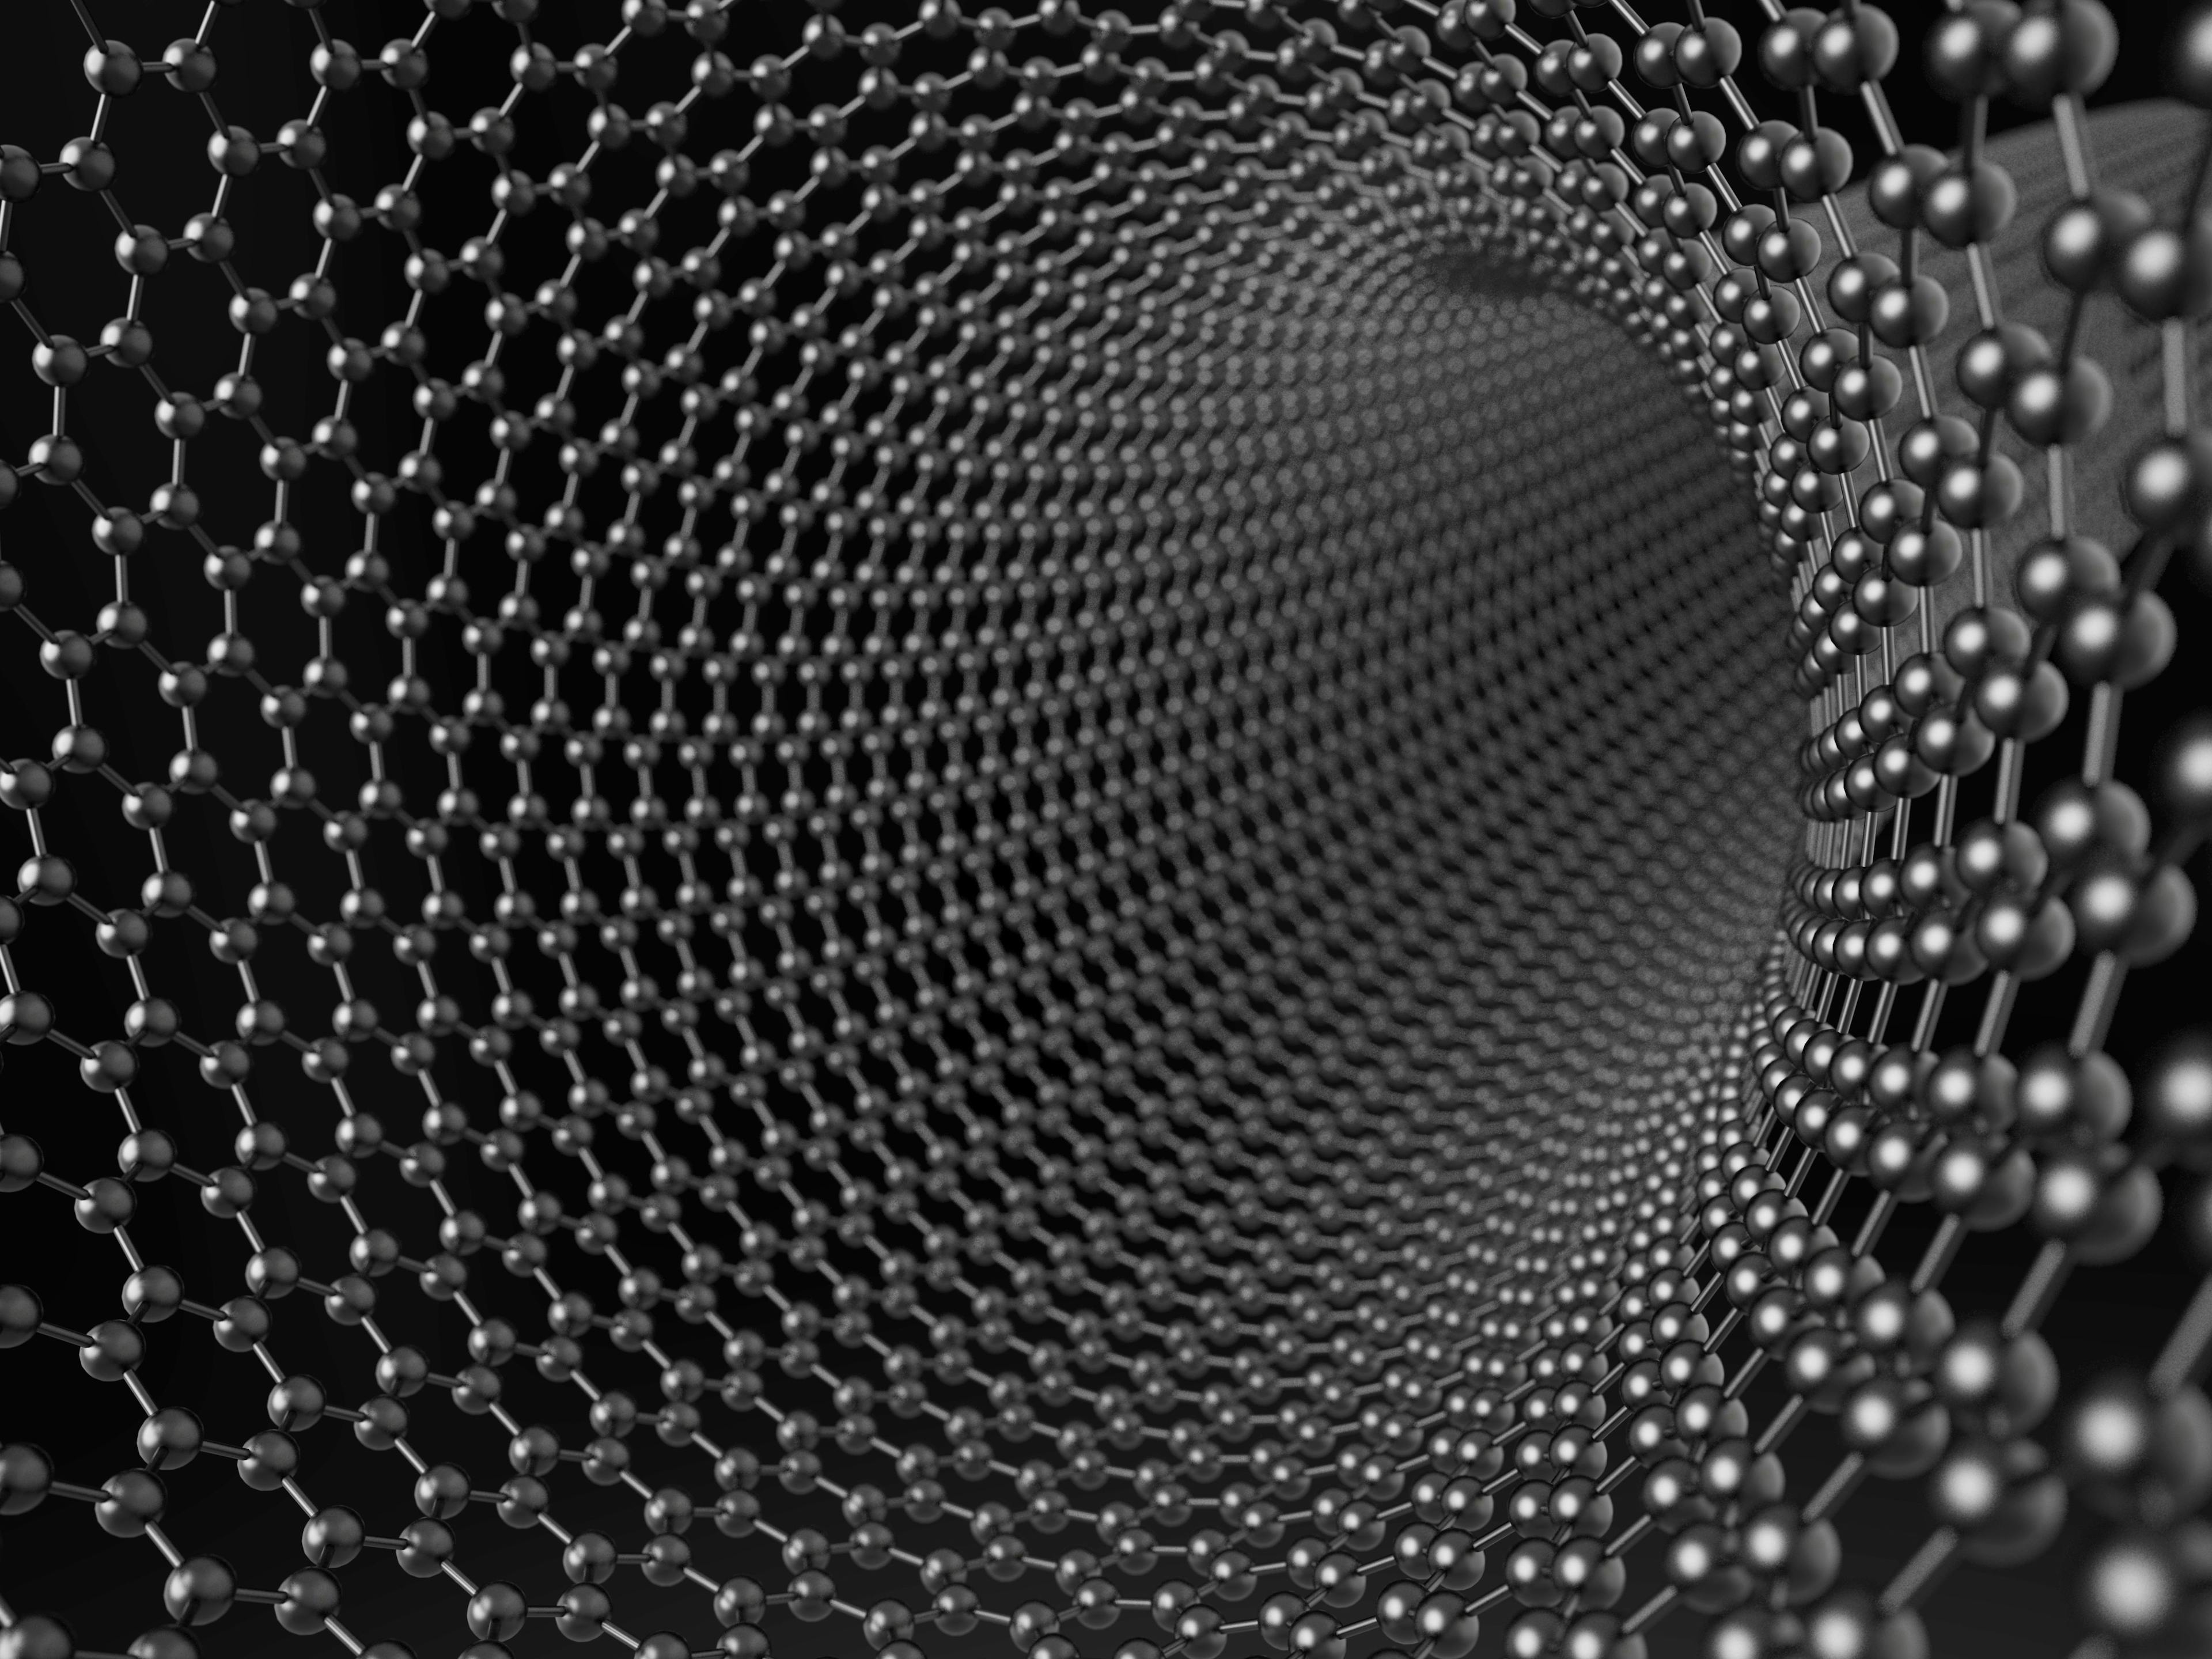 Carbon nanotube. | Image Credit: © Modella - stock.adobe.com